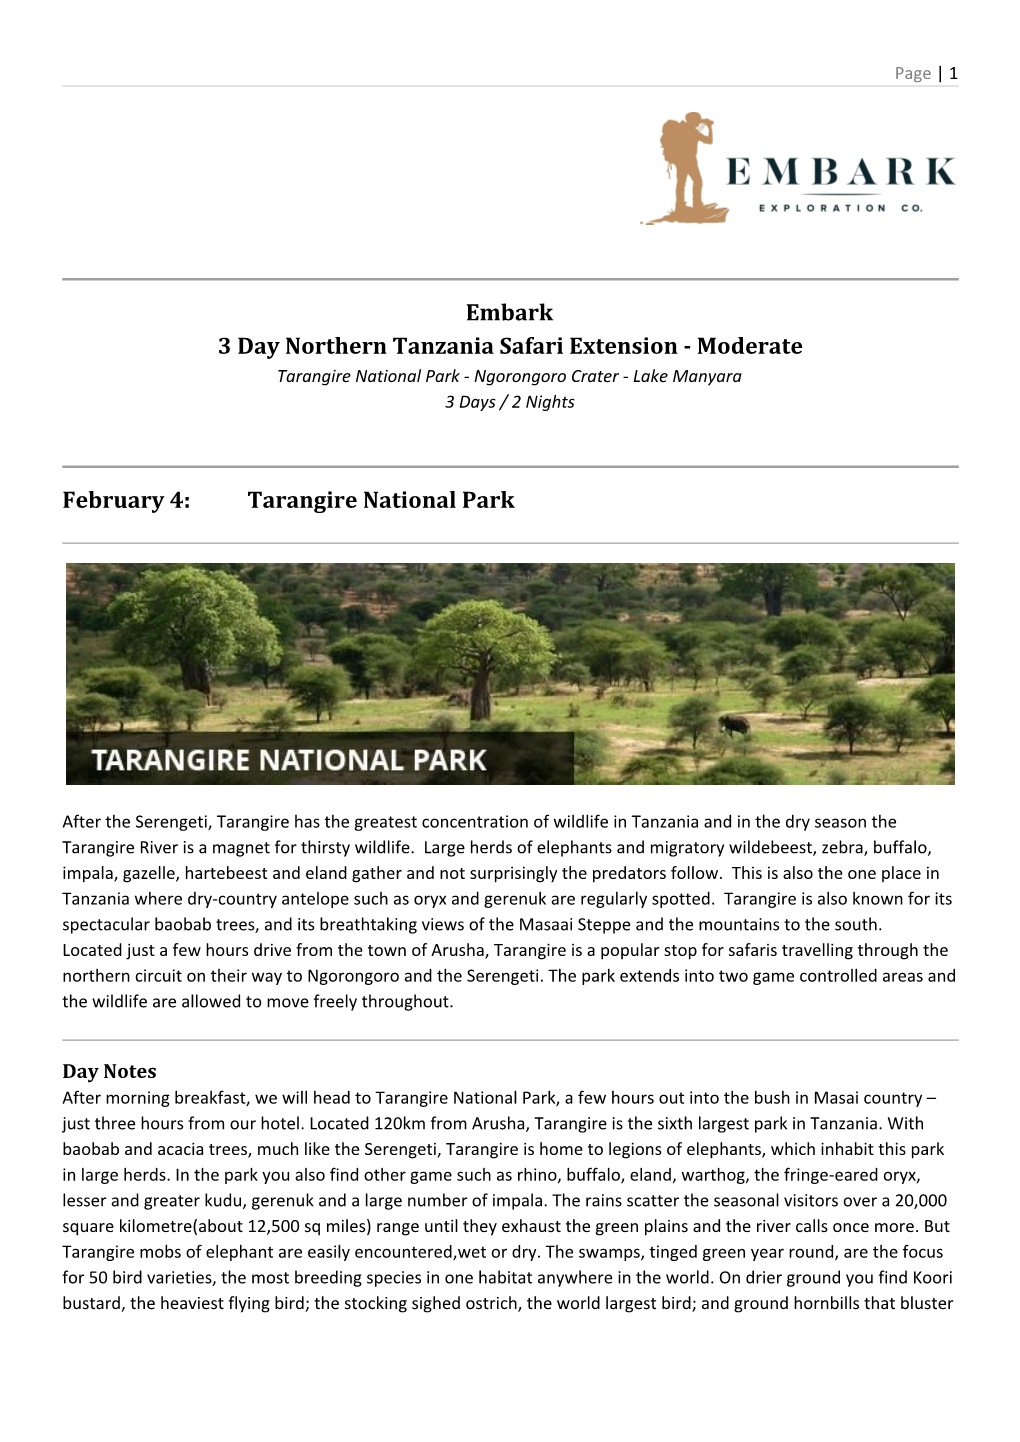 Moderate February 4: Tarangire National Park